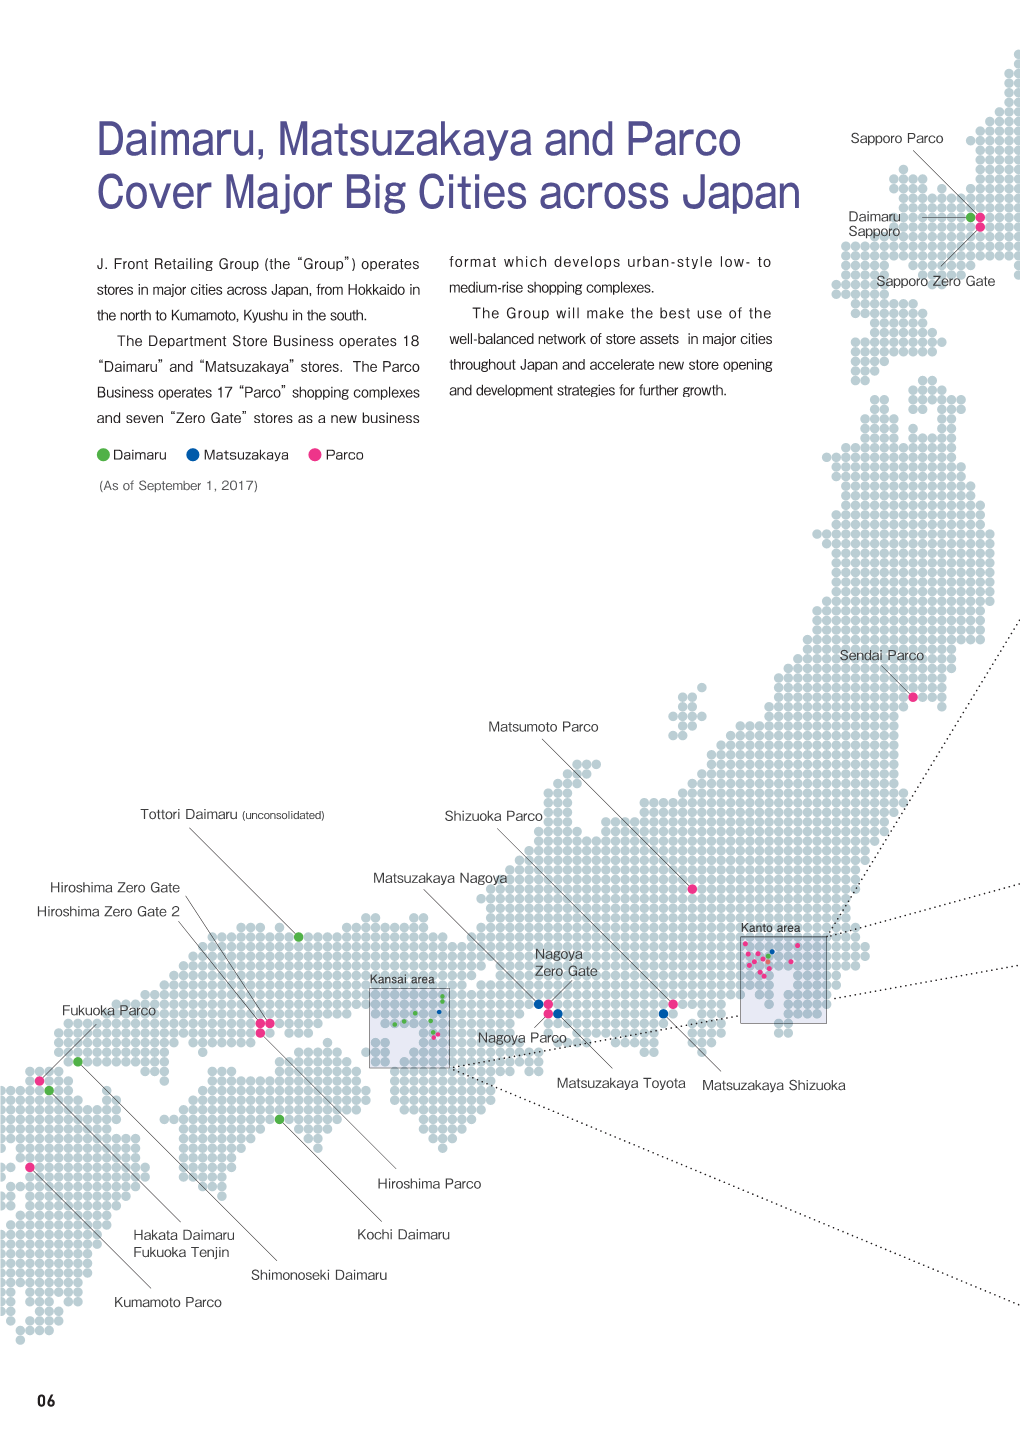 Daimaru, Matsuzakaya and Parco Cover Major Big Cities Across Japan